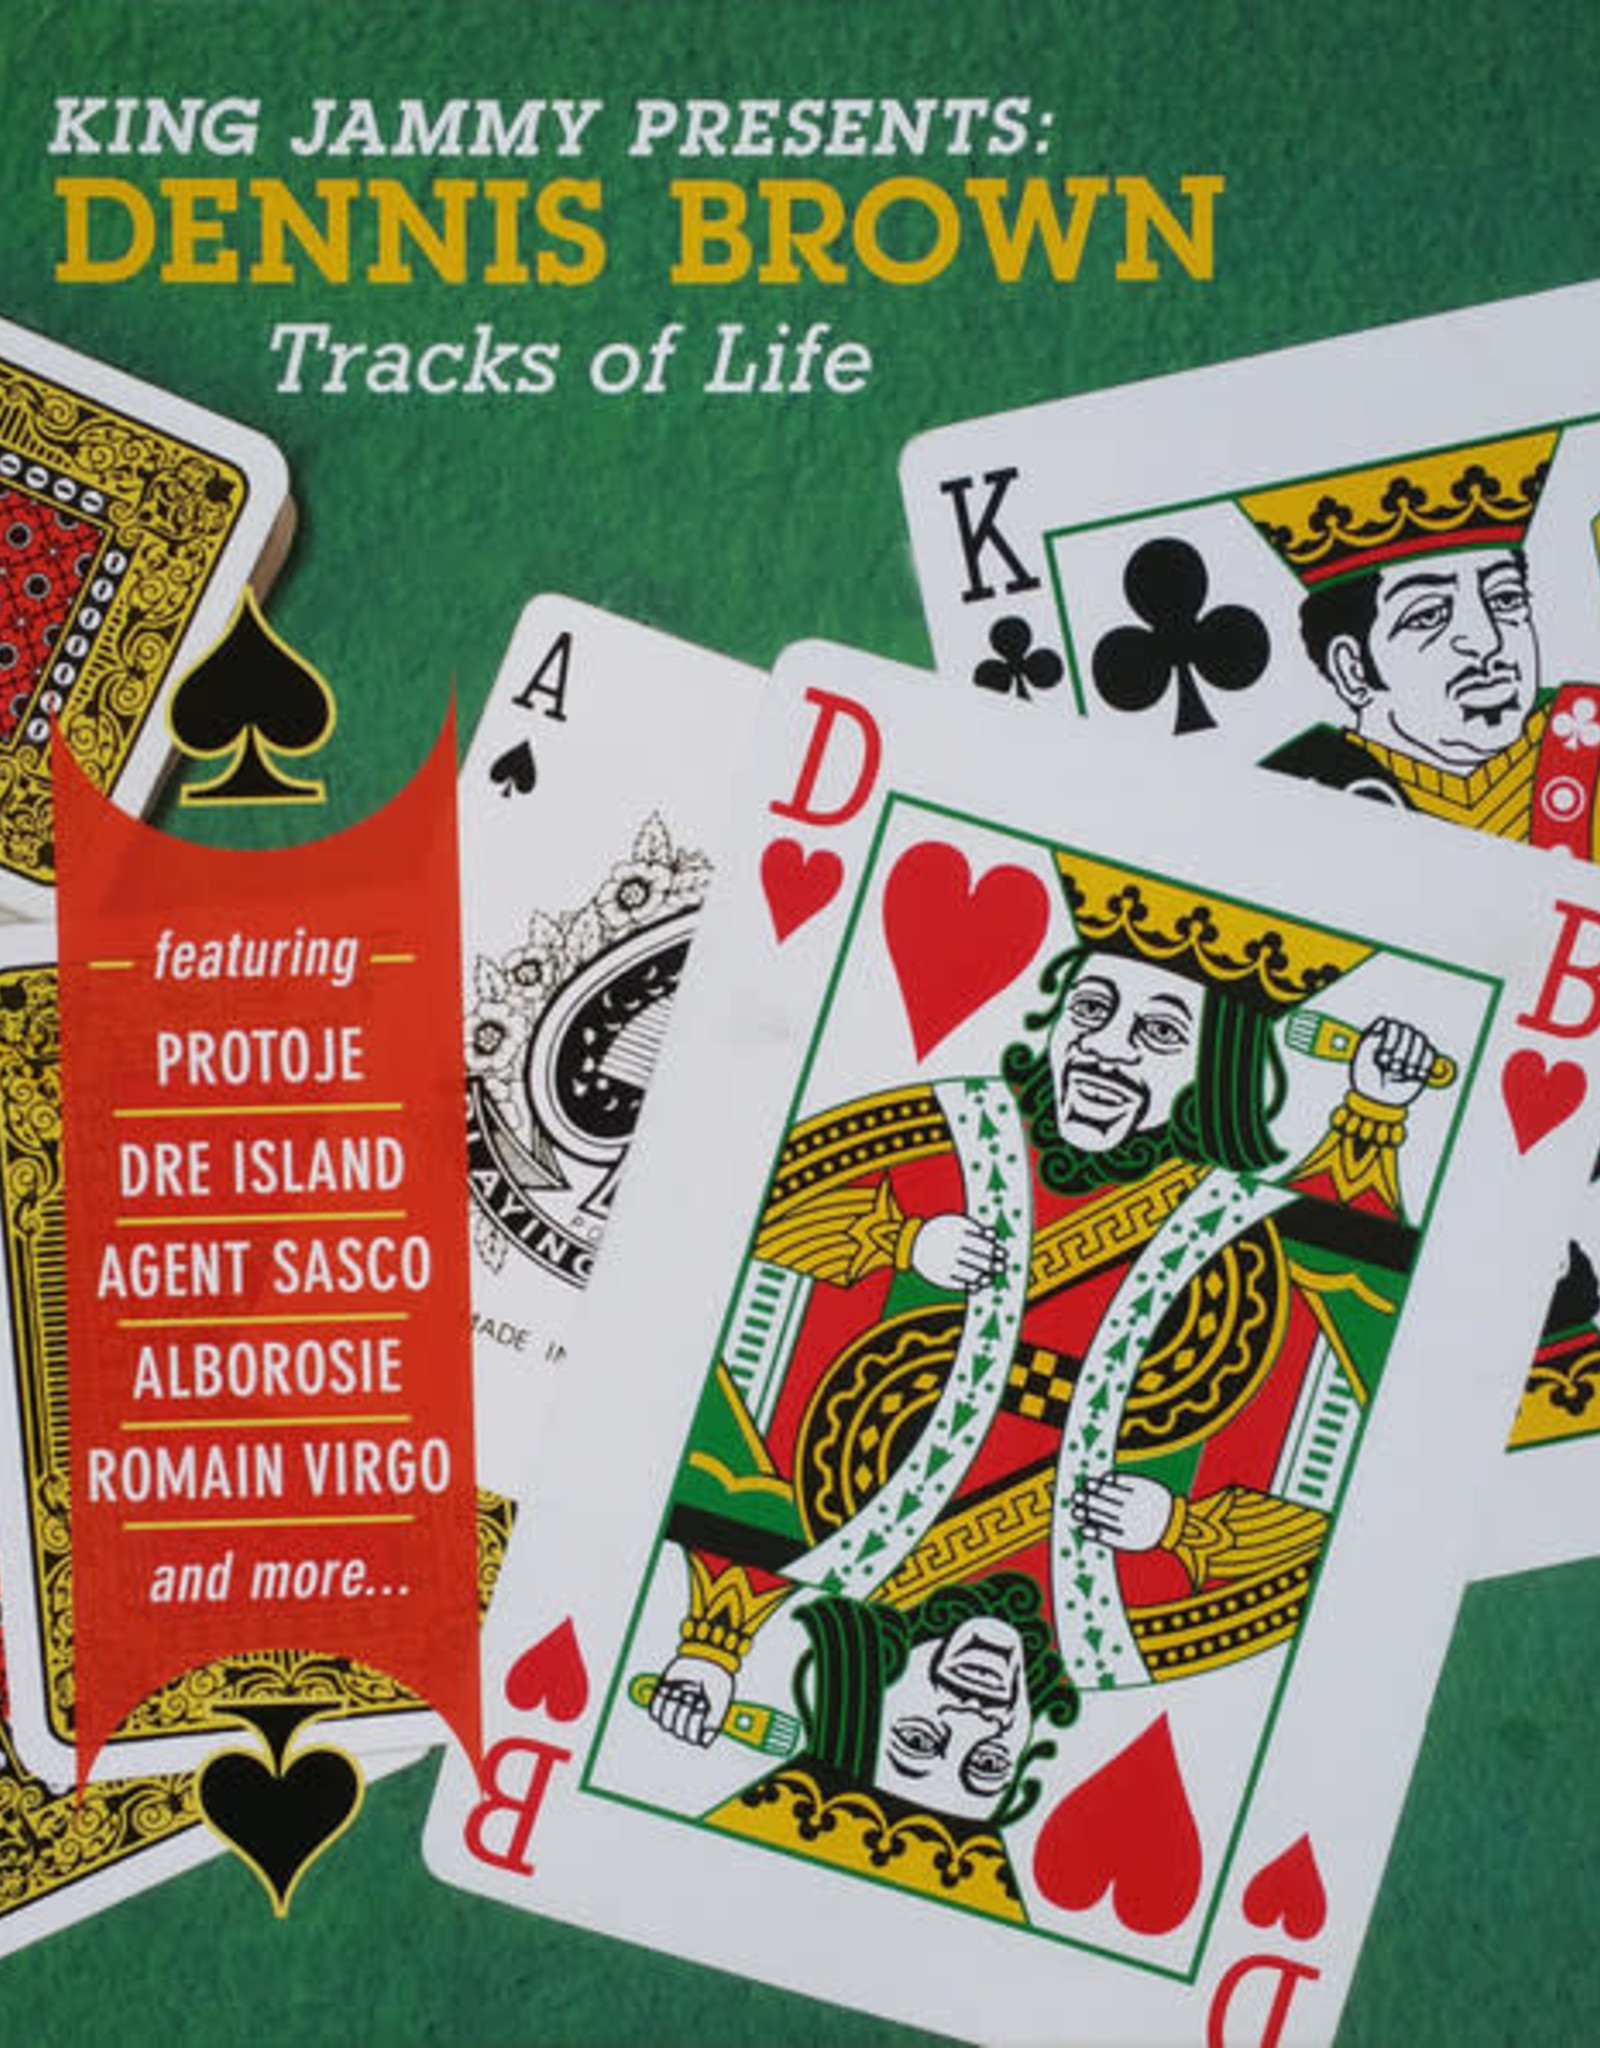 Dennis Brown - King Jammy Presents: Dennis Brown Tracks Of Life